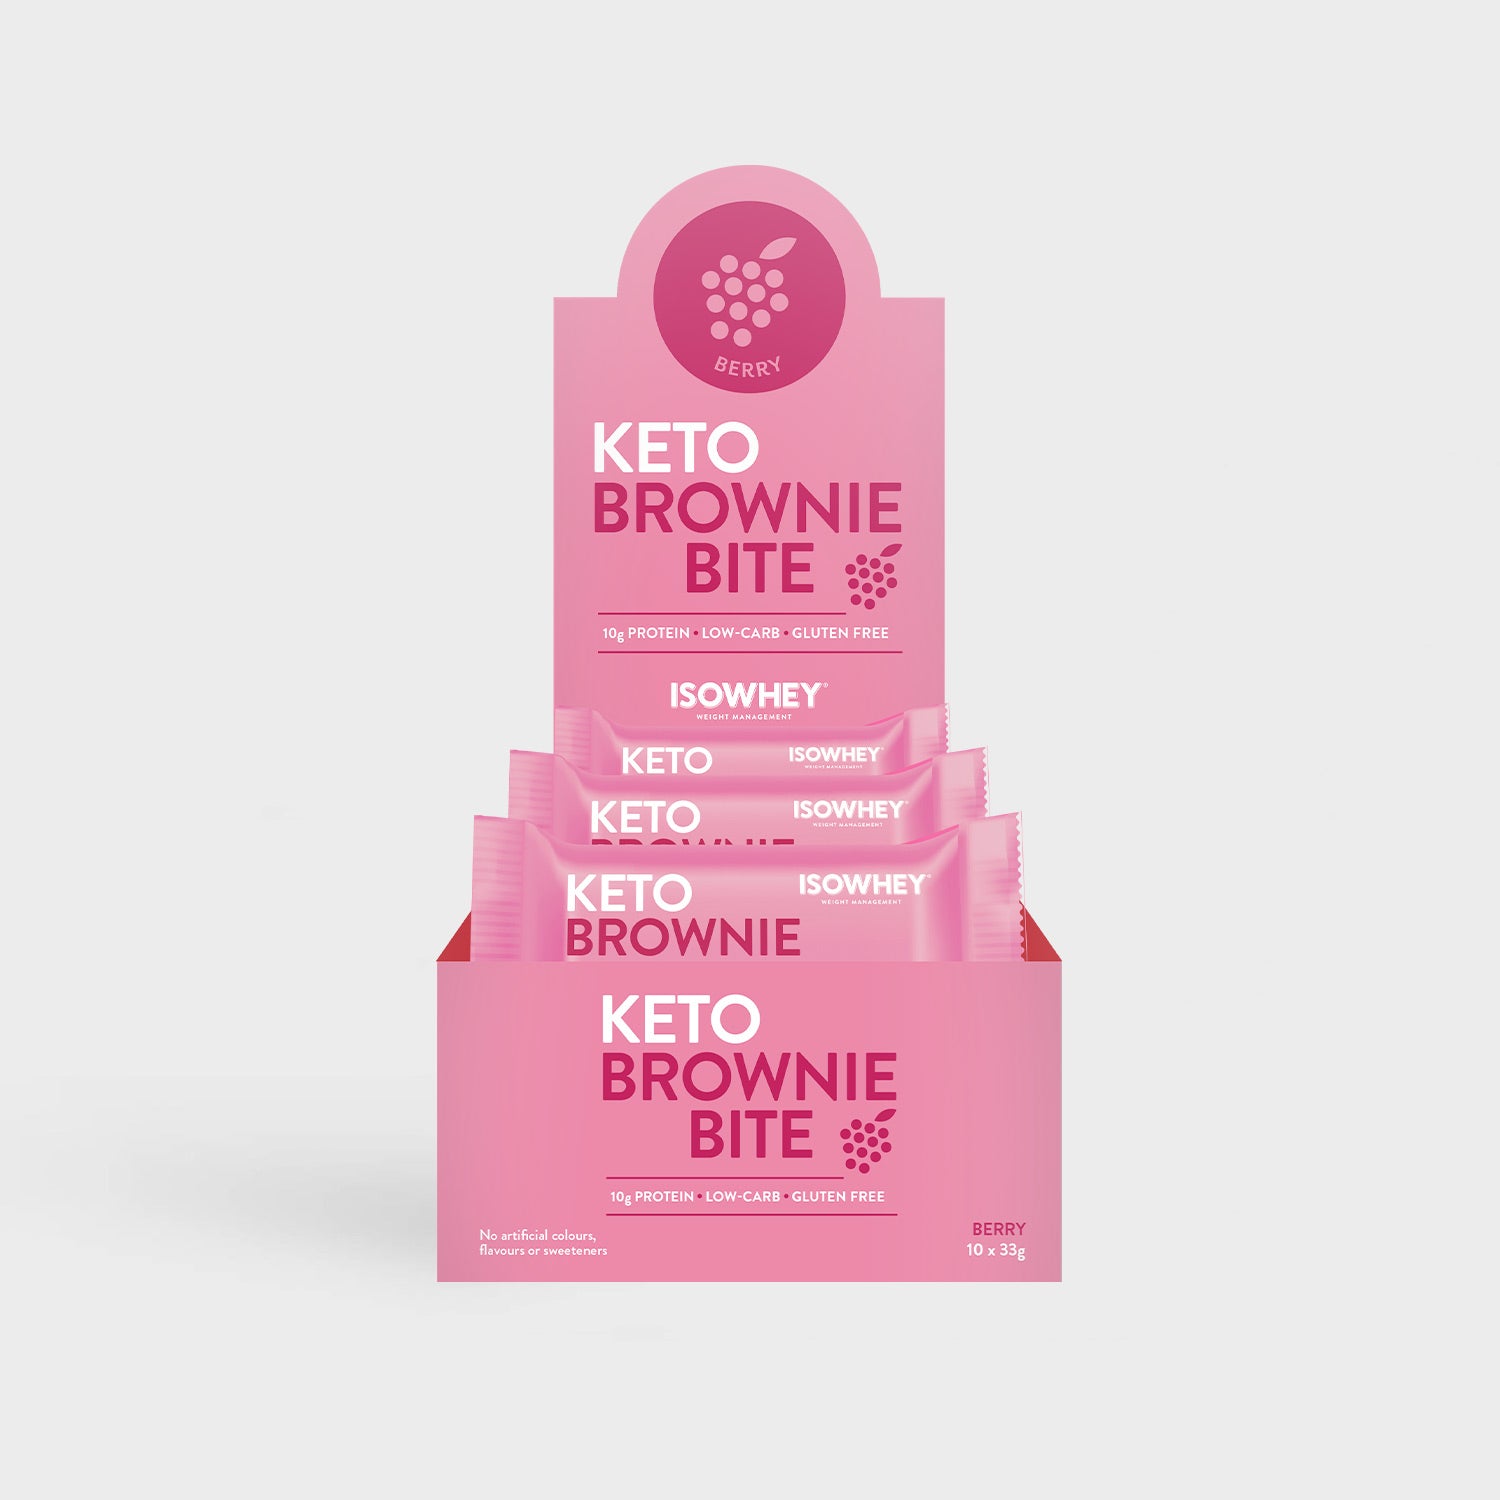 IsoWhey Keto Brownie Bite: Berry in Display box